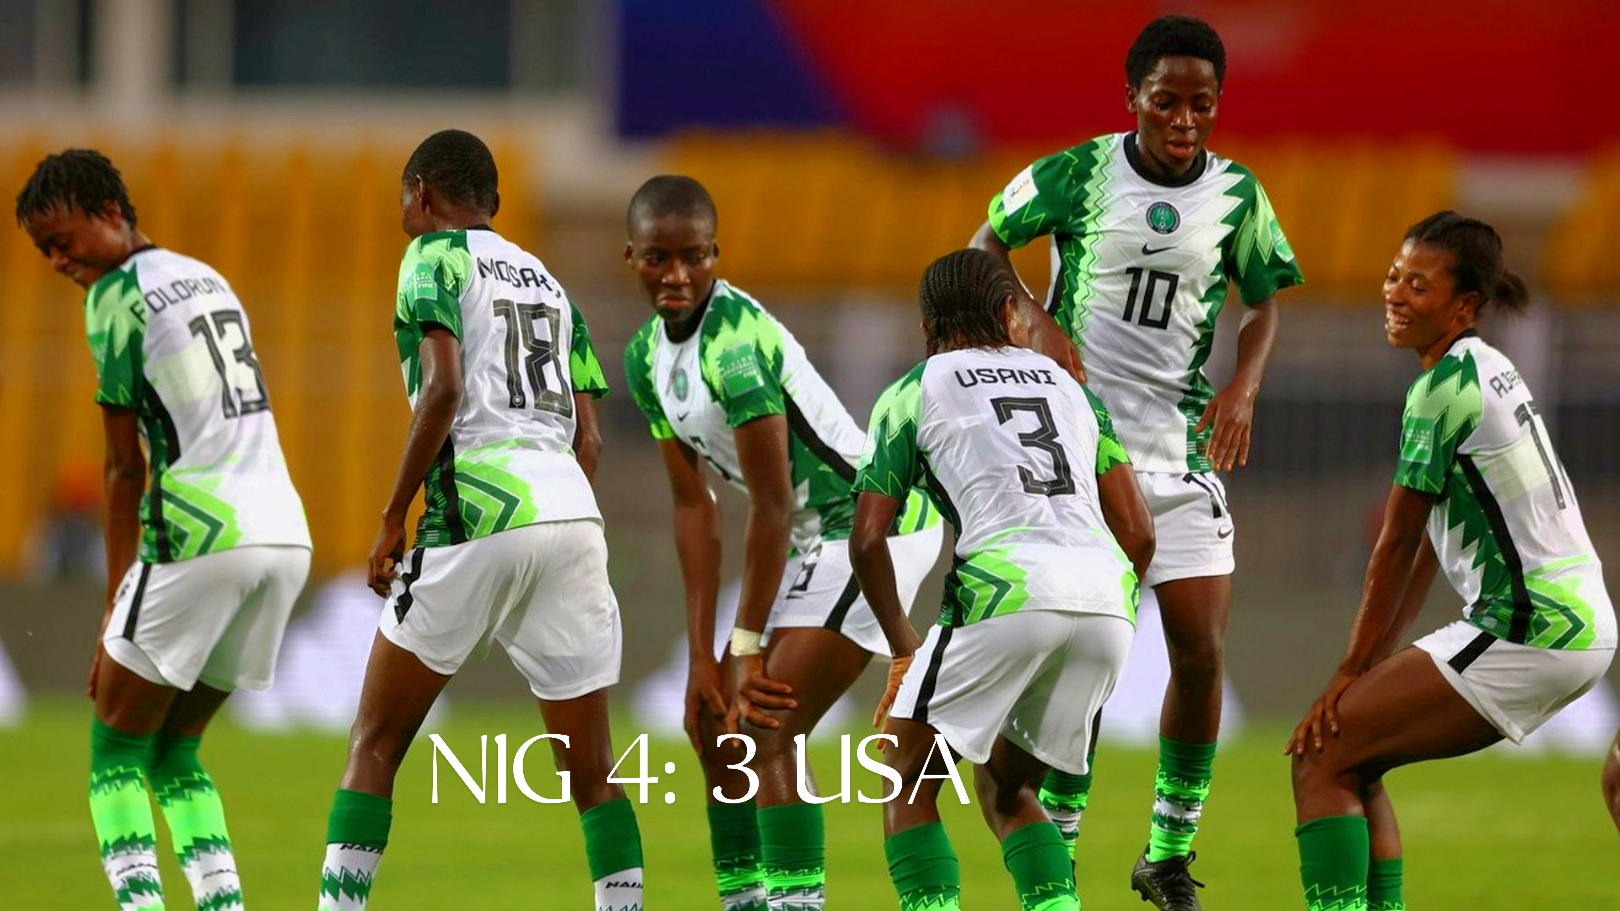 FIFA UNDER-17 WORLD CUP; NIGERIA’S FLAMINGOS KNOCKOUT USA: